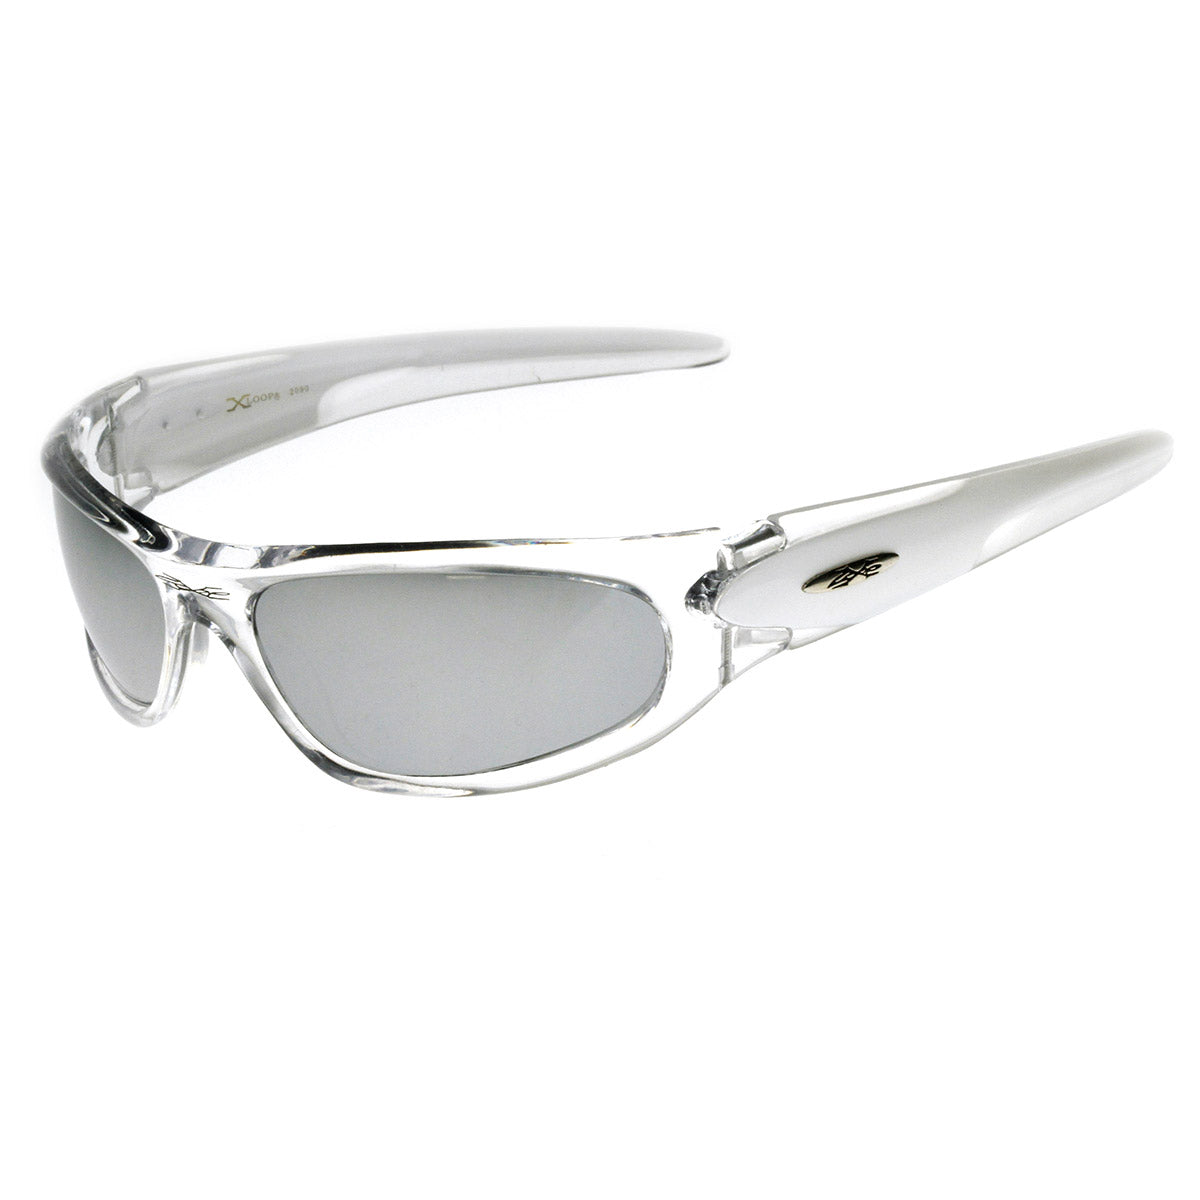 X Loop Brand Two Tone Wraparound Sports Sunglasses Sunglass La